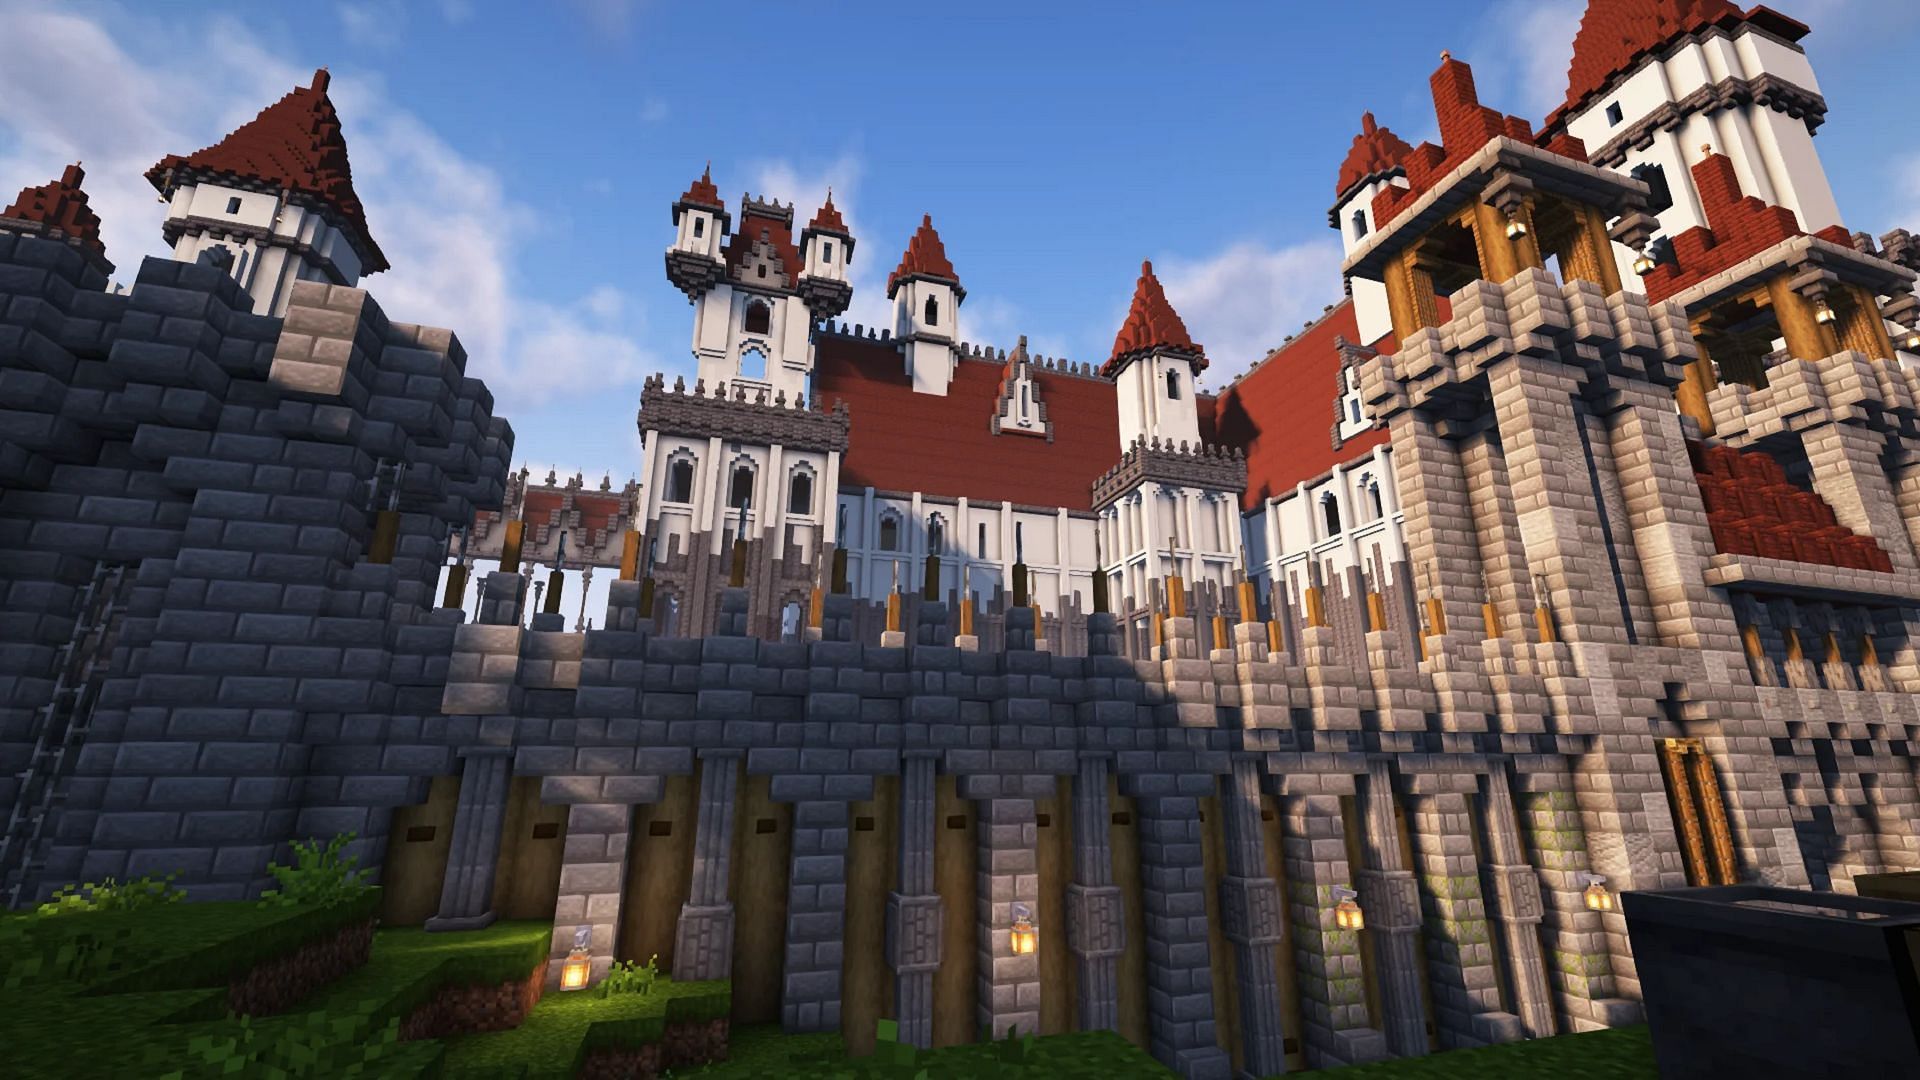 Minecraft player builds impressive medieval castle in survival